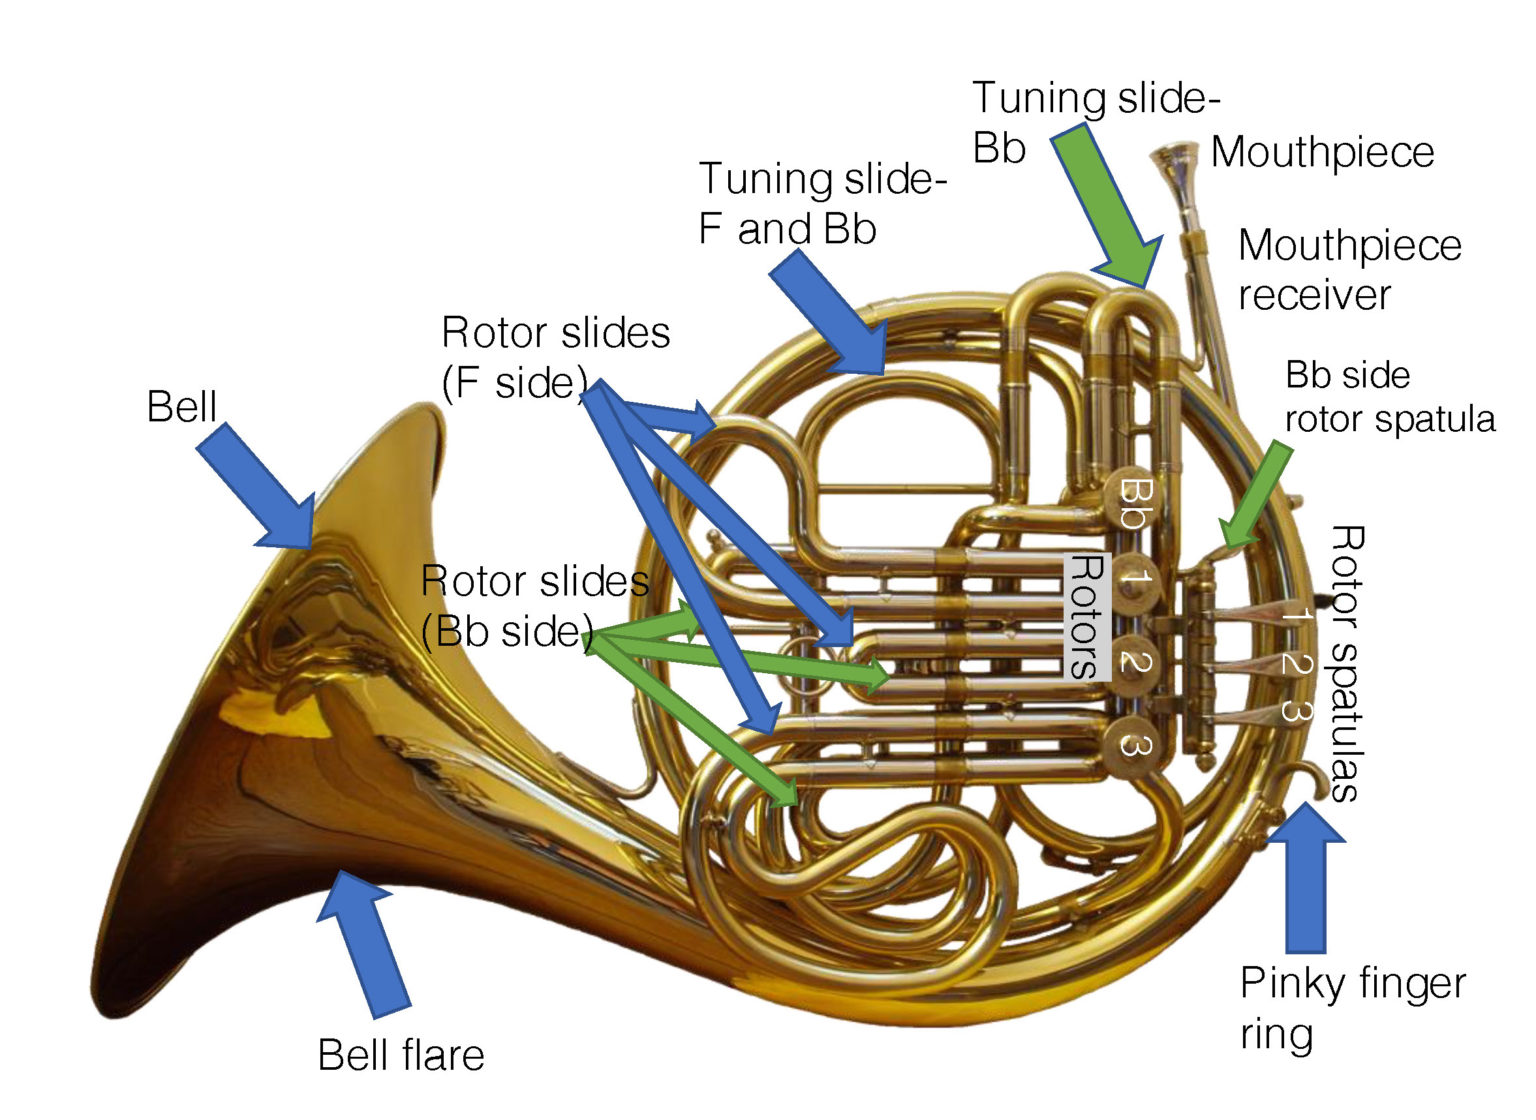 Double Horn Chart